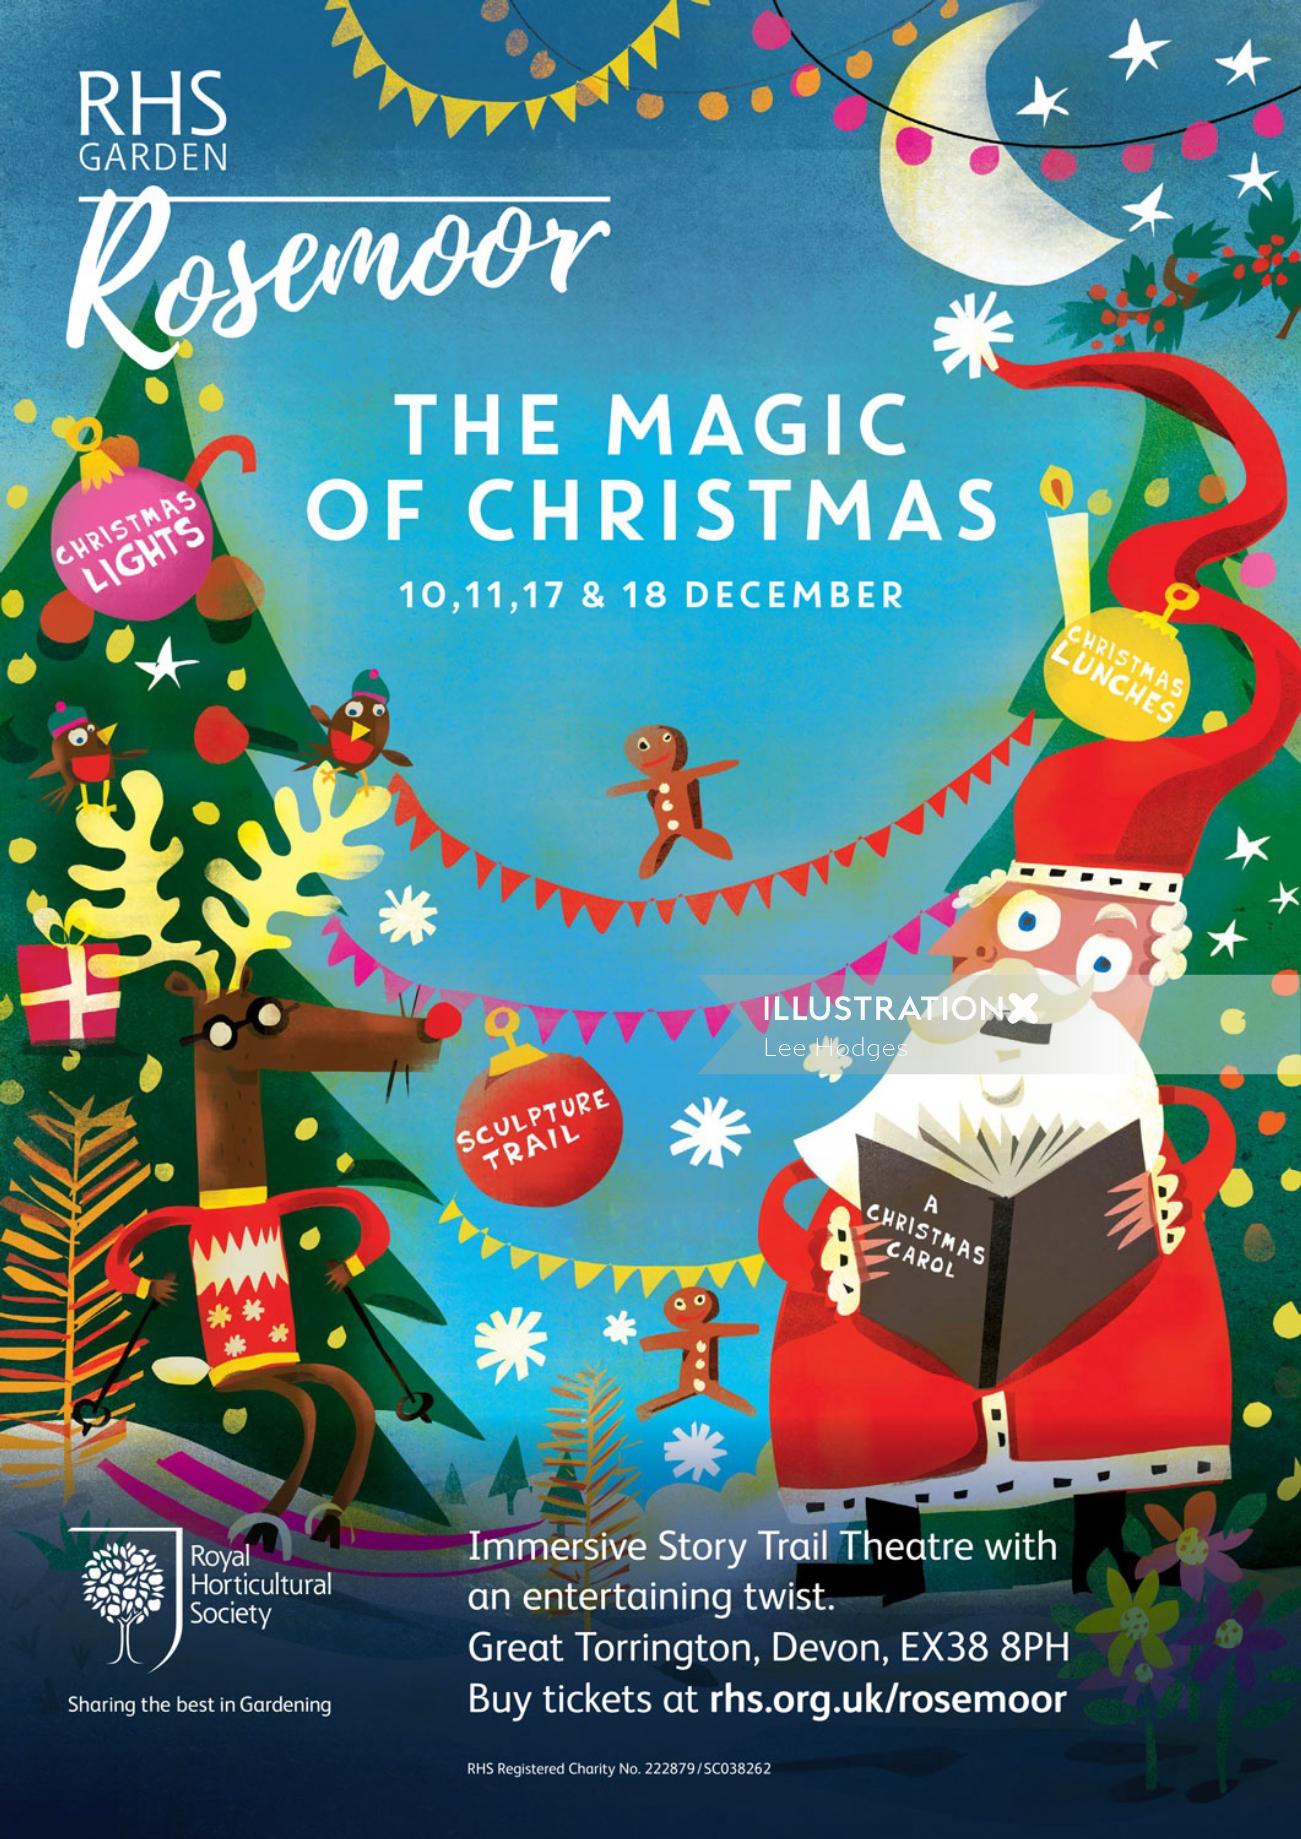 RHS Garden-The Magic of Christmas poster art